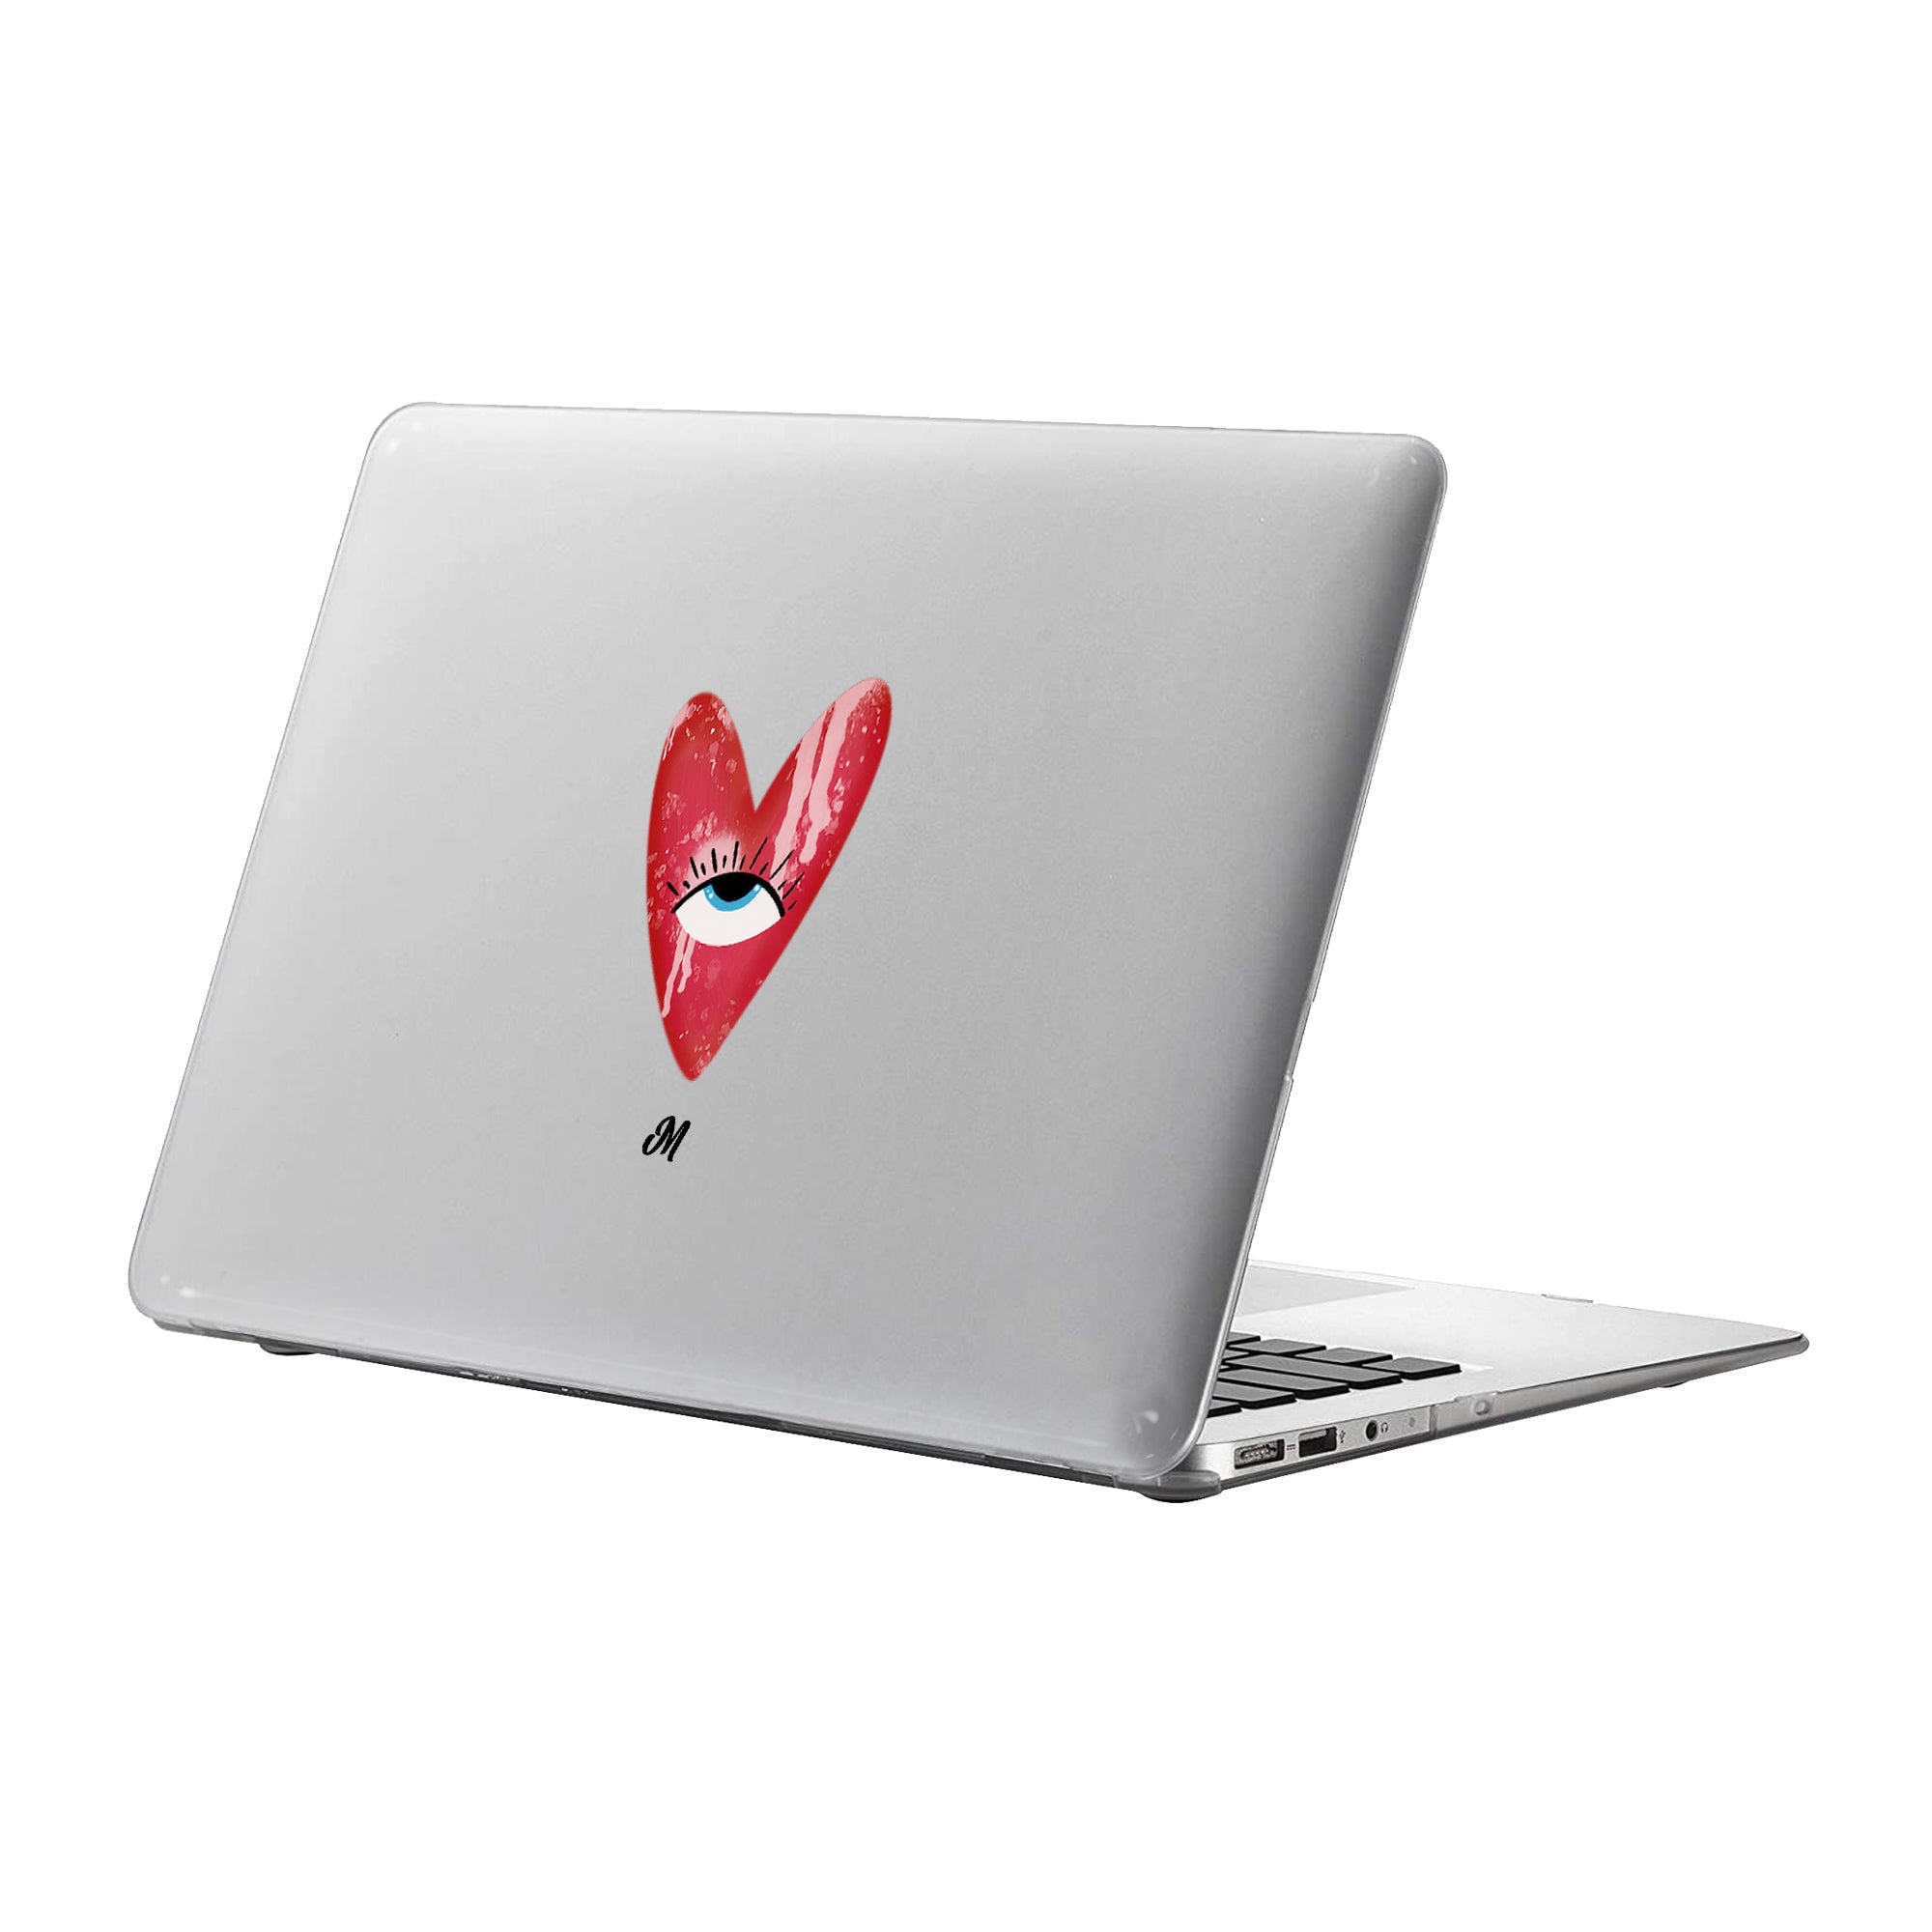 Sad Heart MacBook Case - Mandala Cases